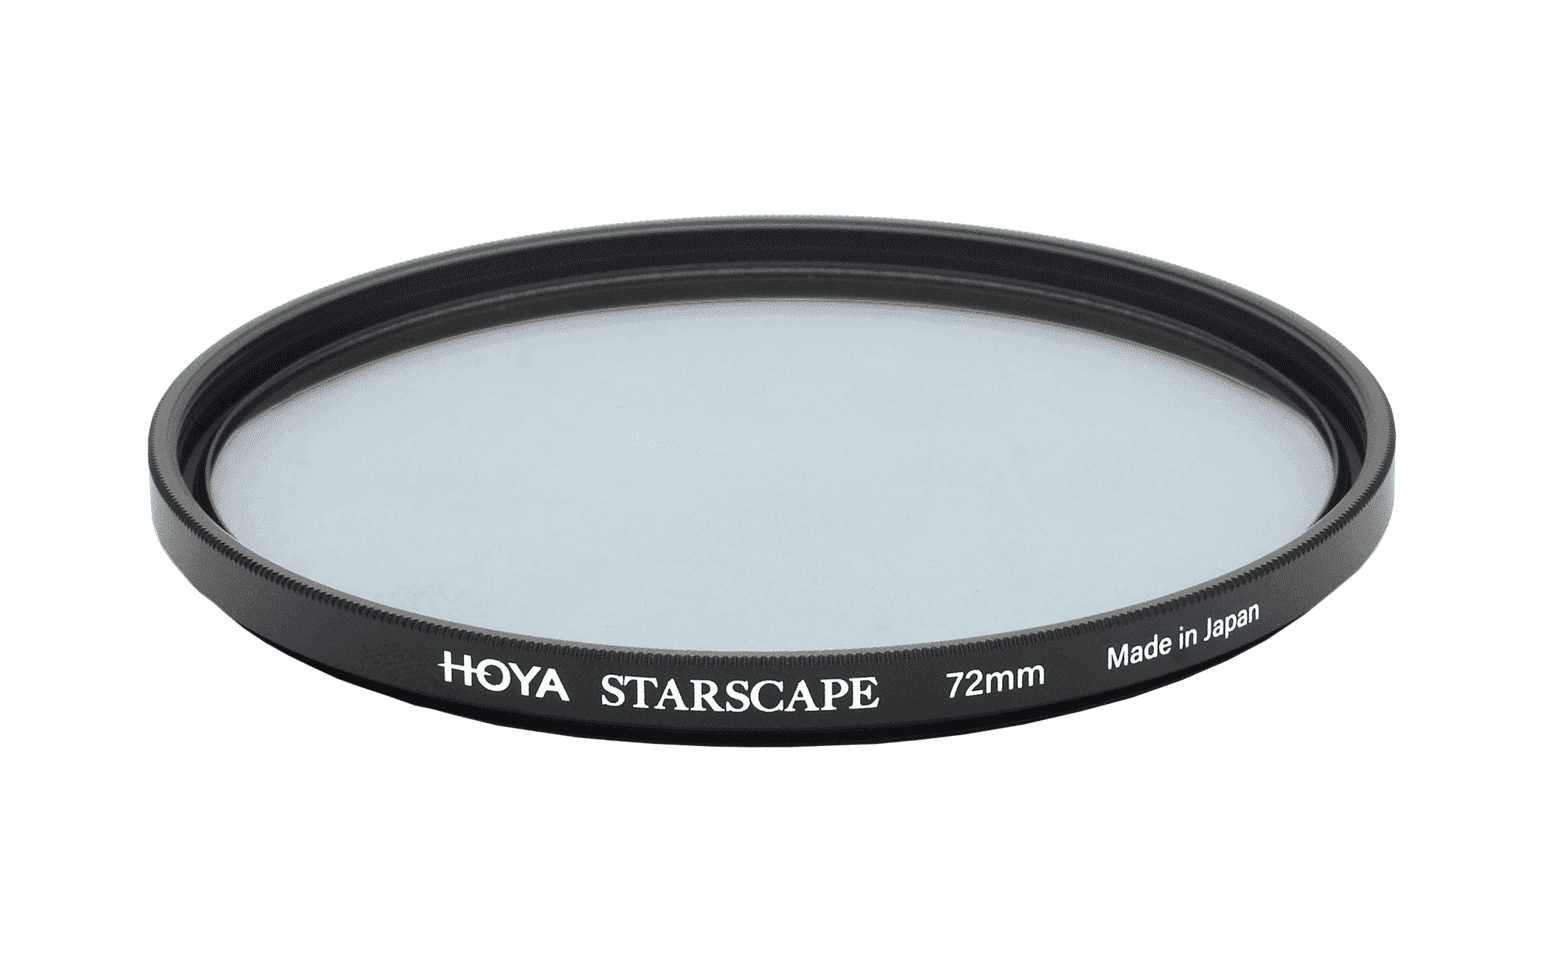 Hoya Starscape Light Pollution Filter